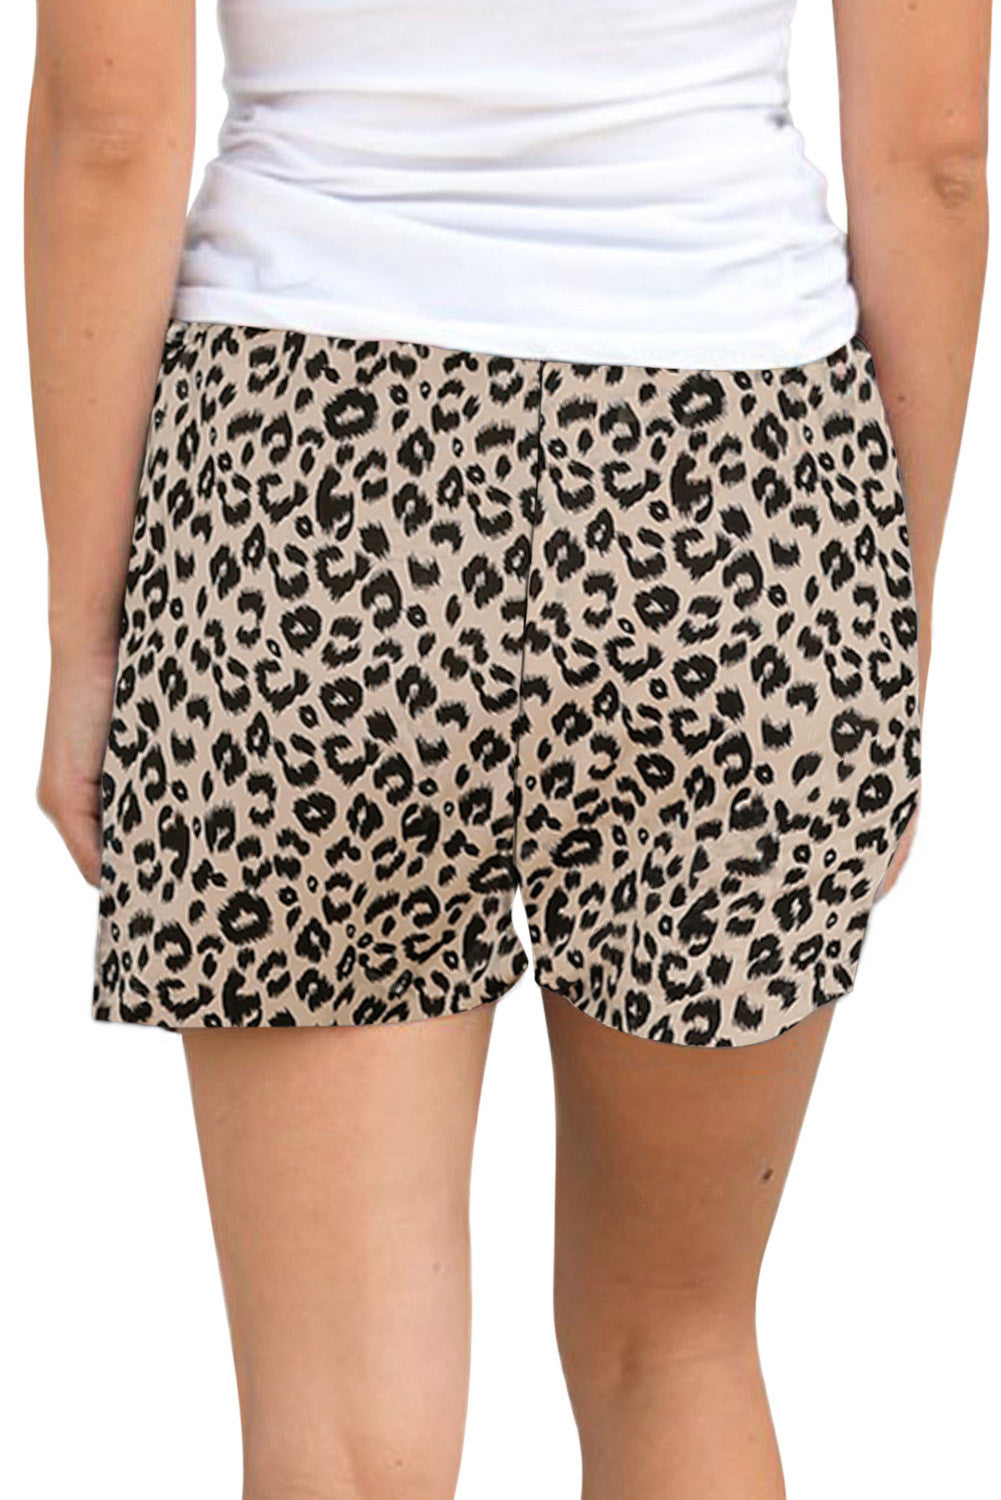 Khaki Leopard Print Shorts - Southern Grace Creations